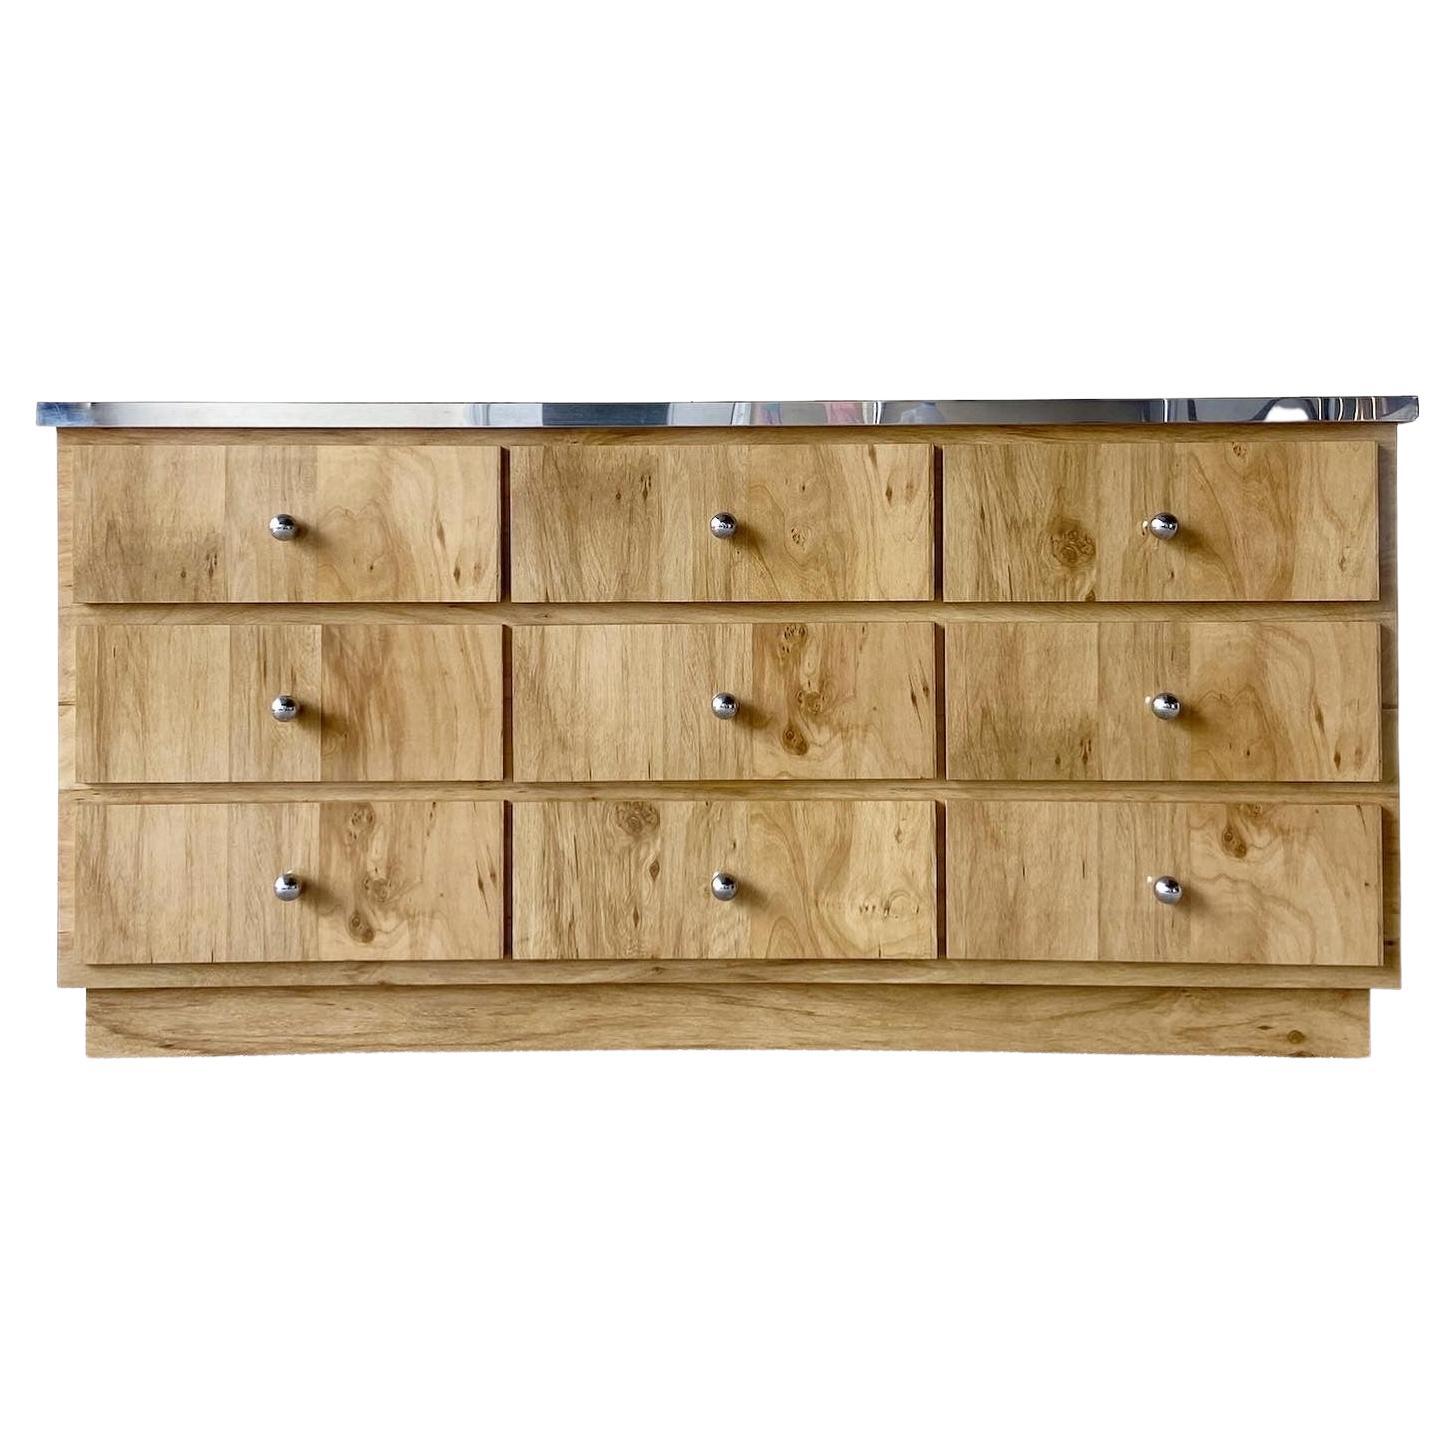 Postmodern Wood Grain Laminate and Chrome Dresser, 9 Drawers